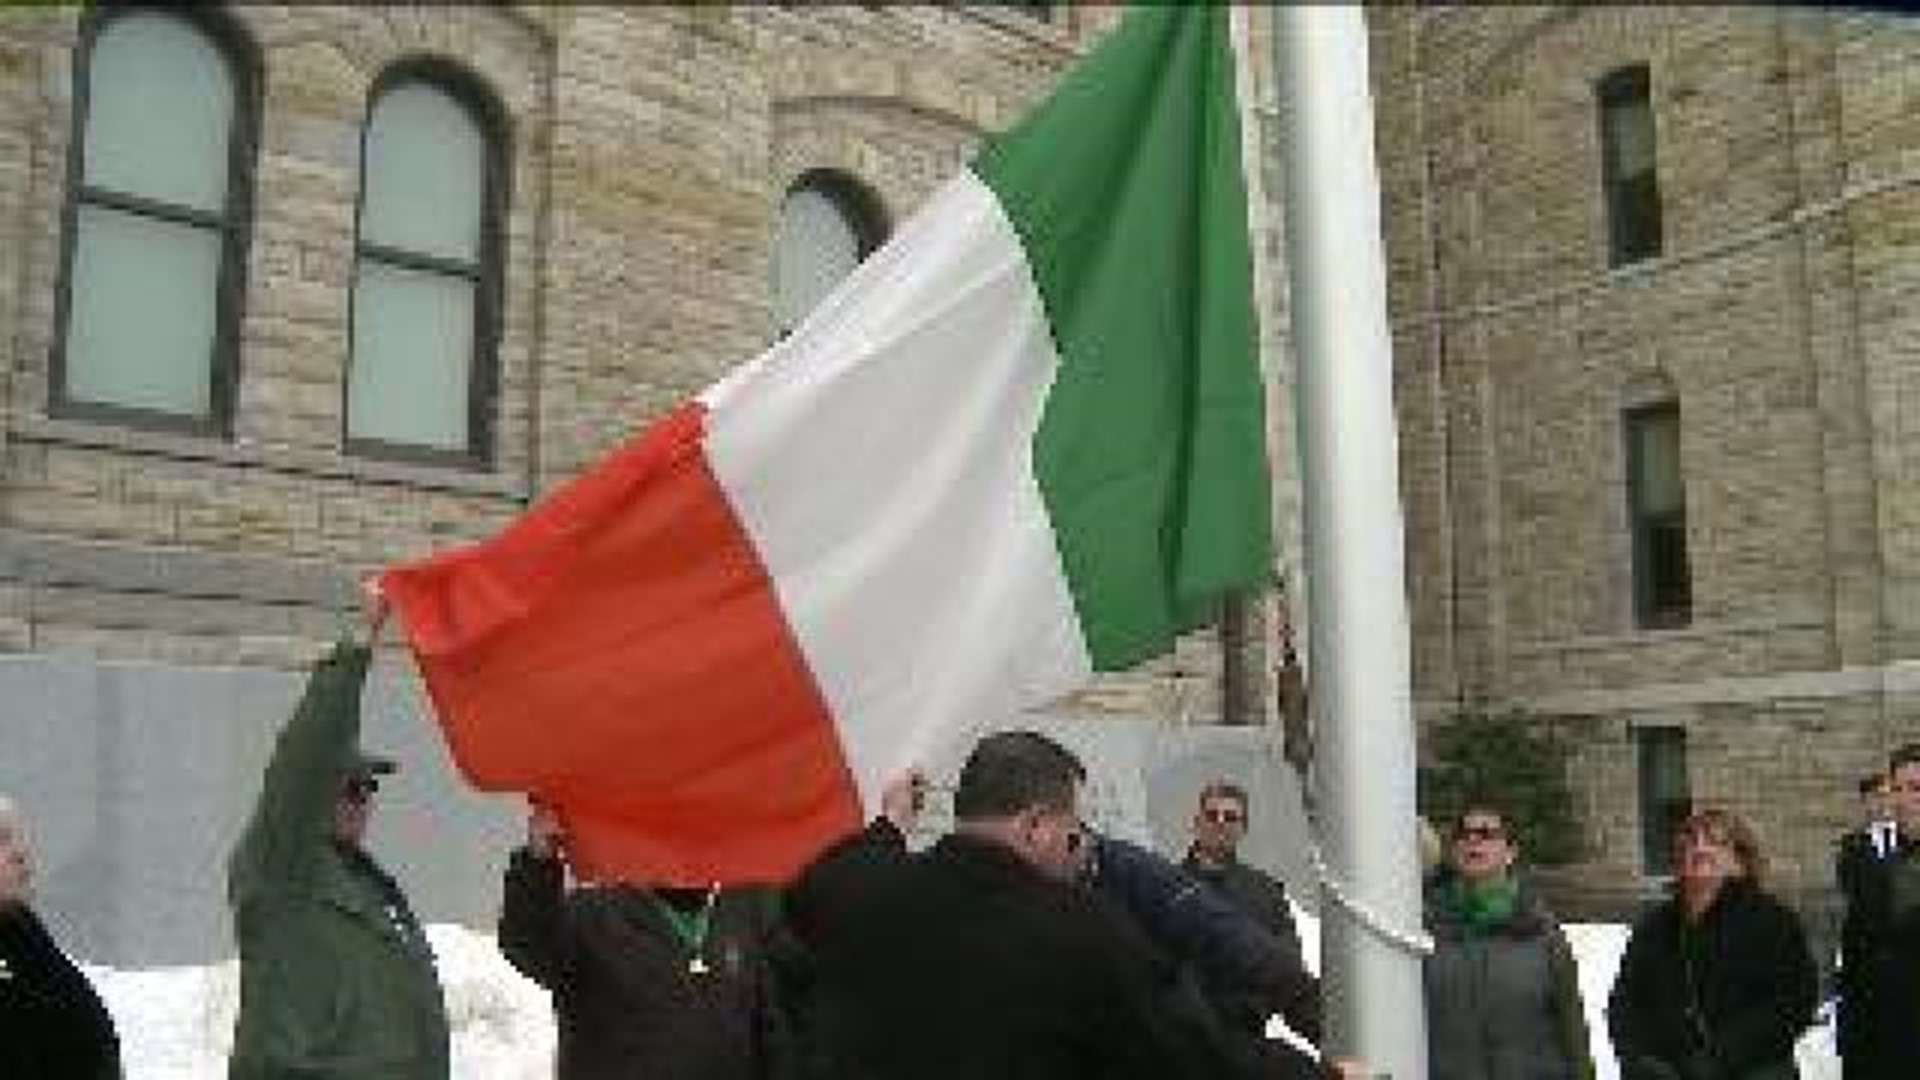 3rd Annual Flag Raising Kicks off St. Patrick’s Day Celebration